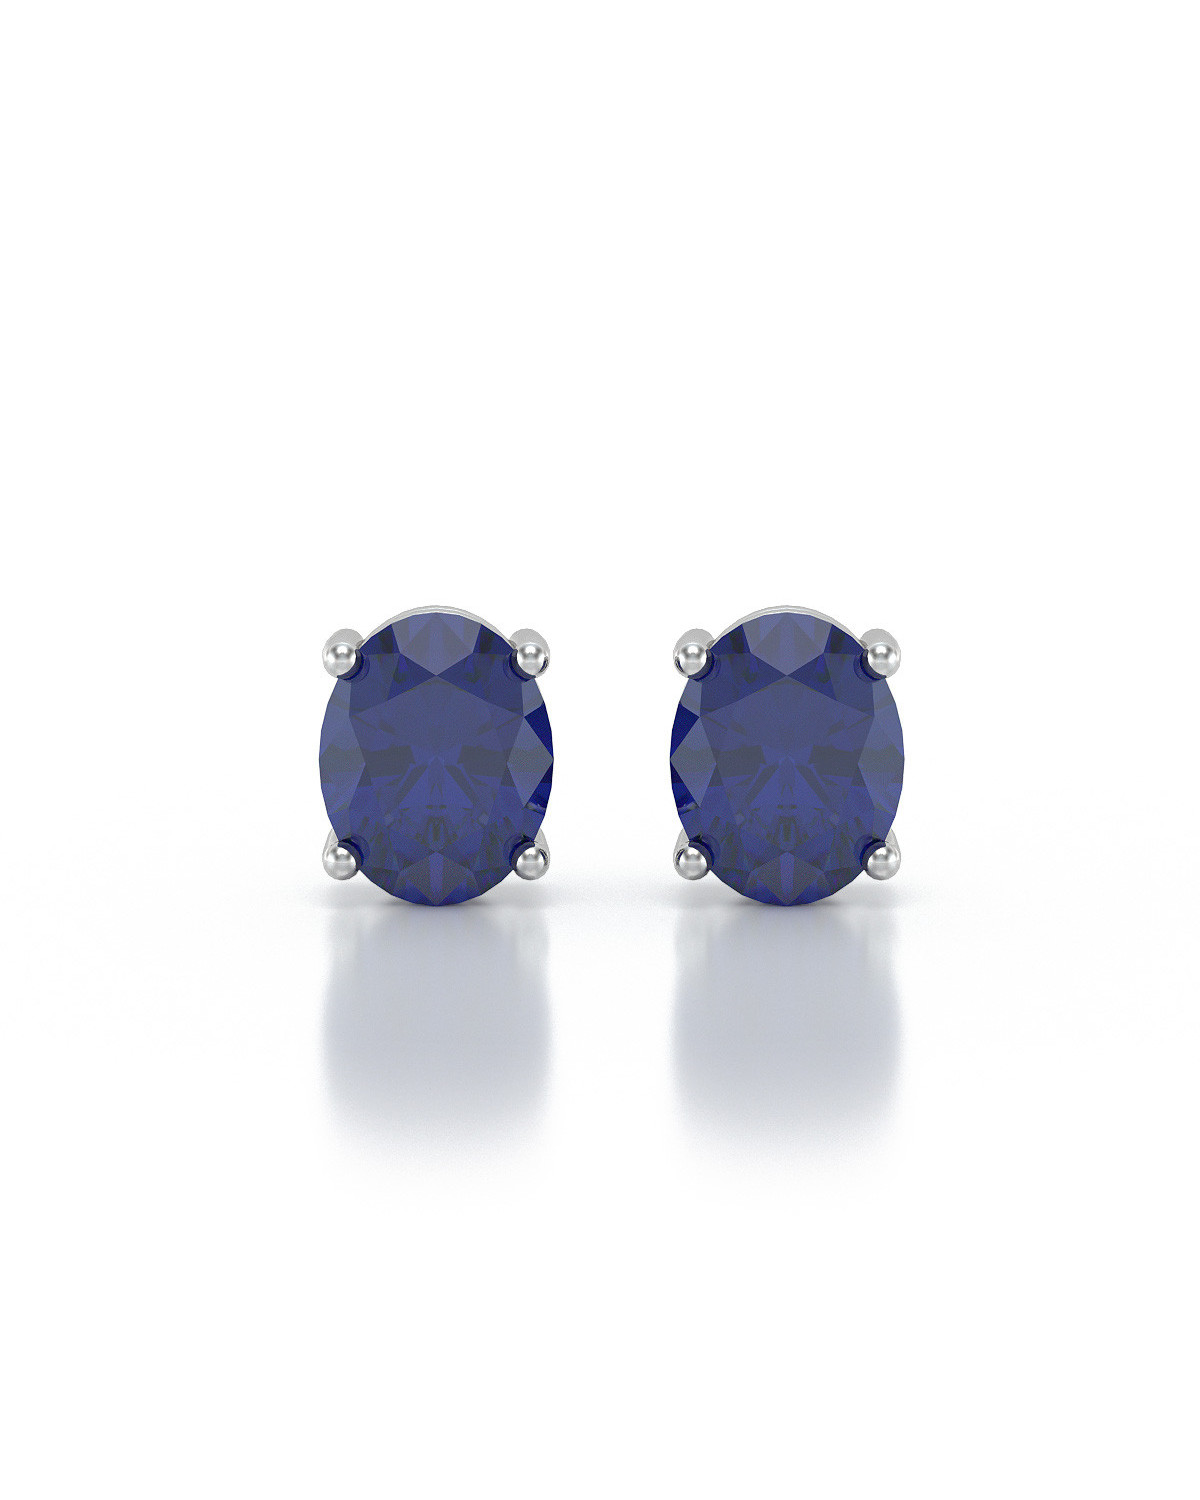 Sapphire & Sterling Silver Earrings | Elegant Style